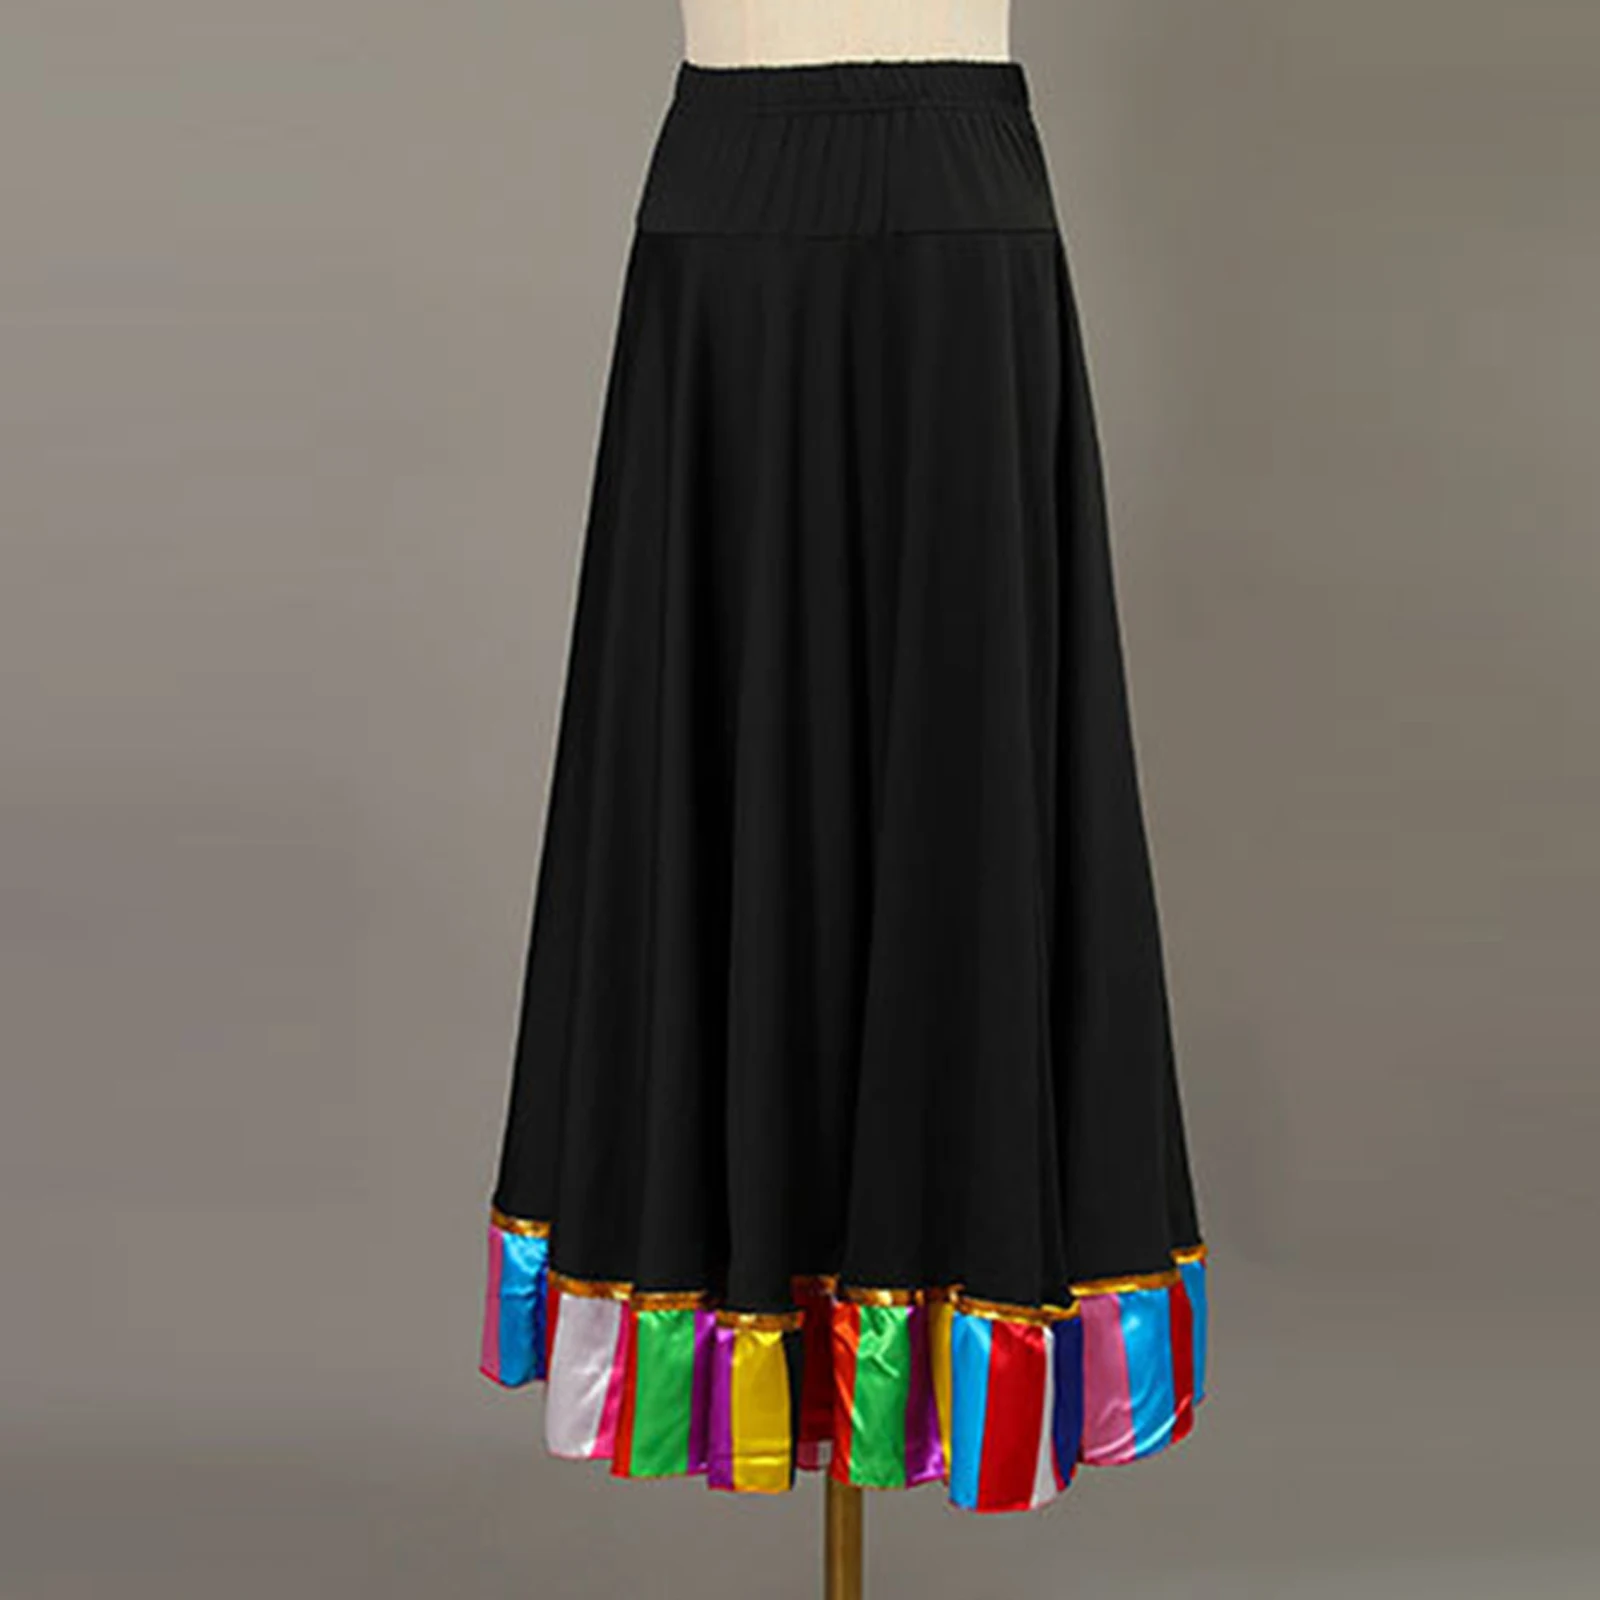 Womens Flamenco Dance Skirt High Waist Colorful Stripe Hem Spanish Folk Midi Swing Skirts Ballroom Stage Performance Costume